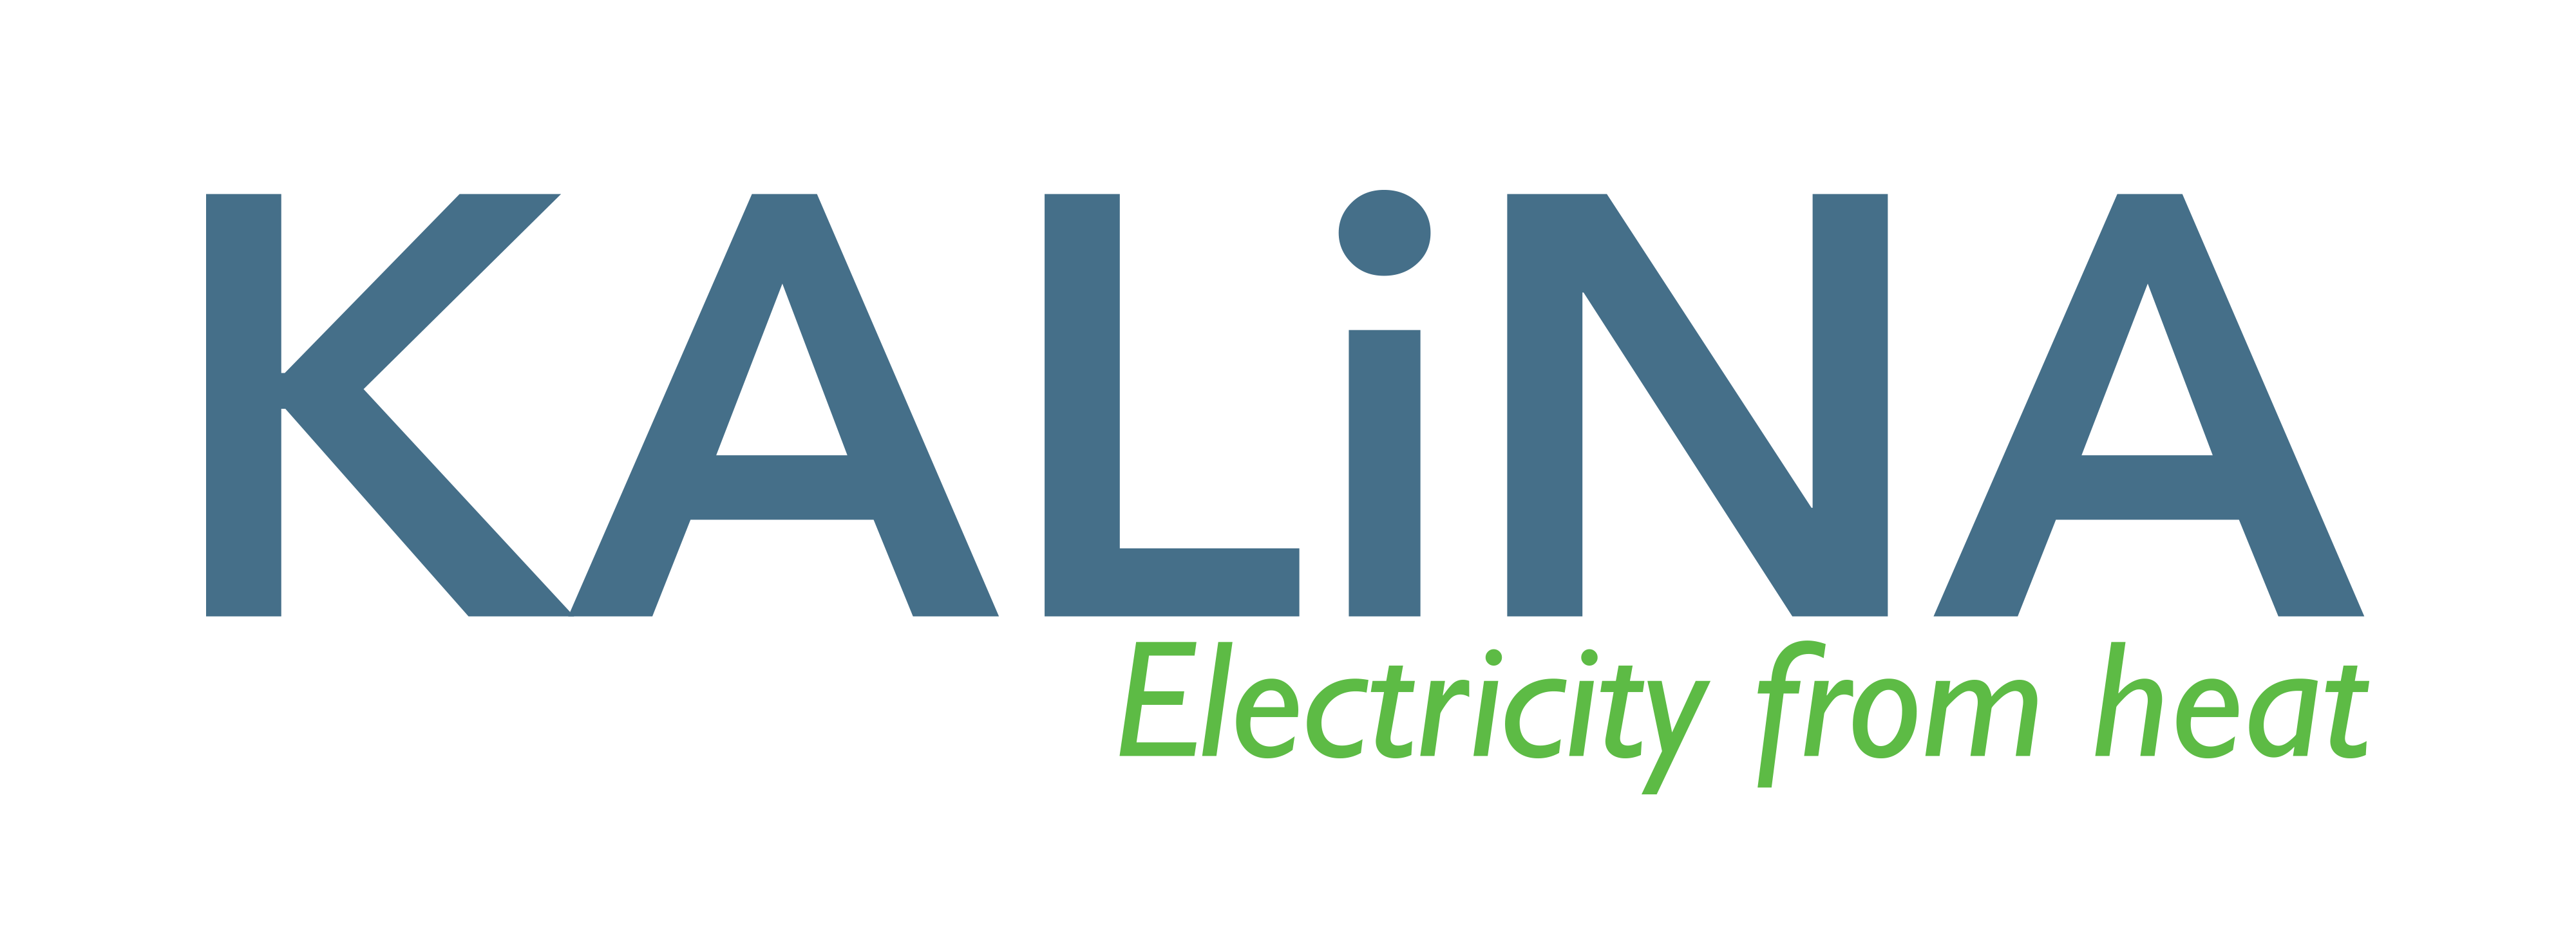 Kalina Power Limited Logo